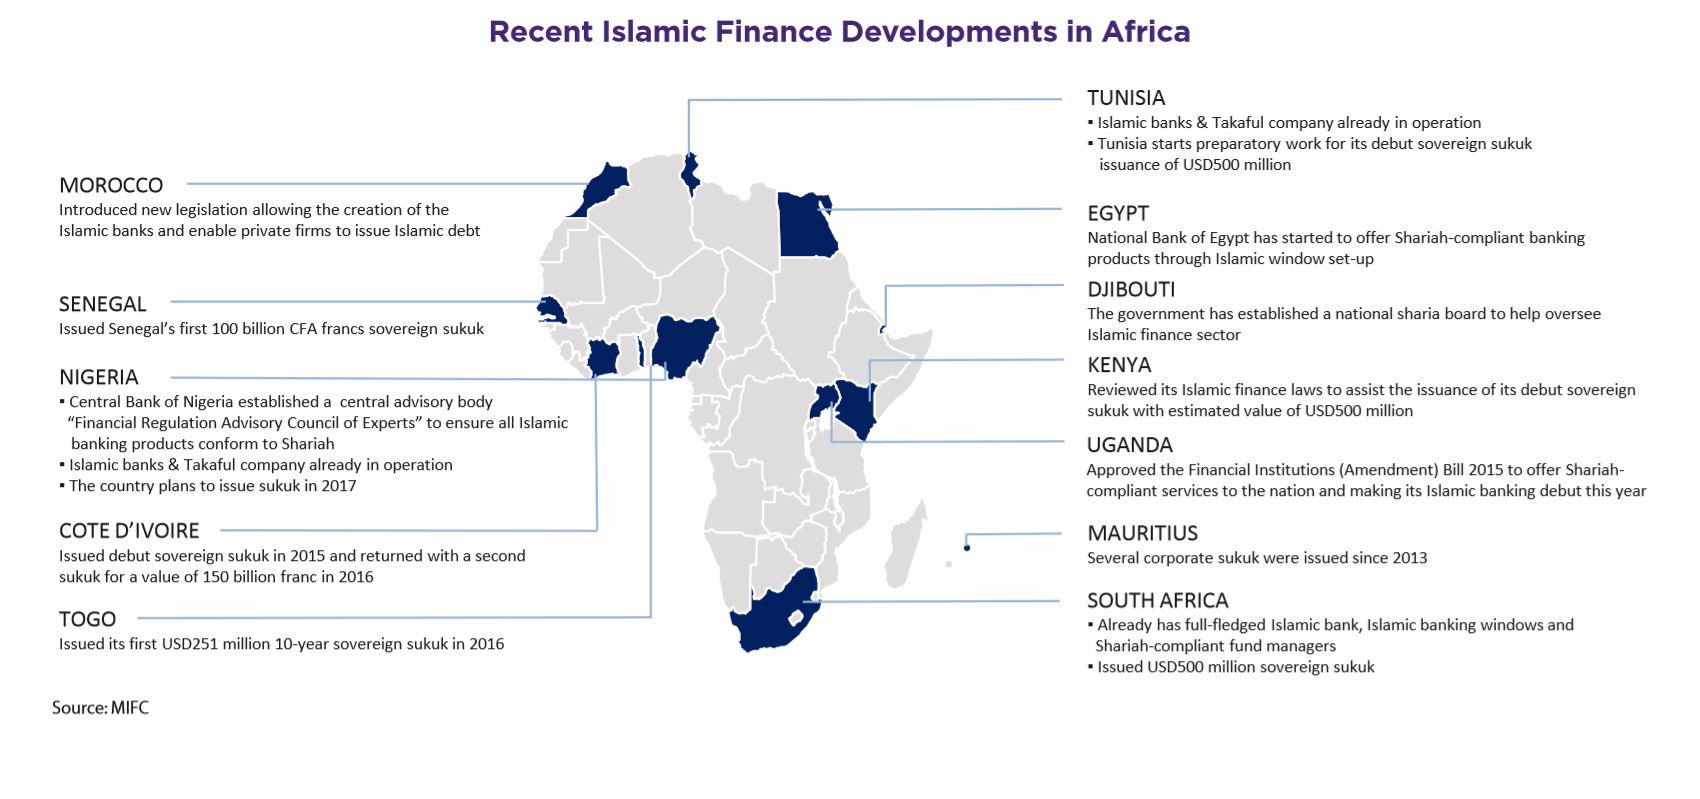 Recent Islamic Finance Developments in Africa